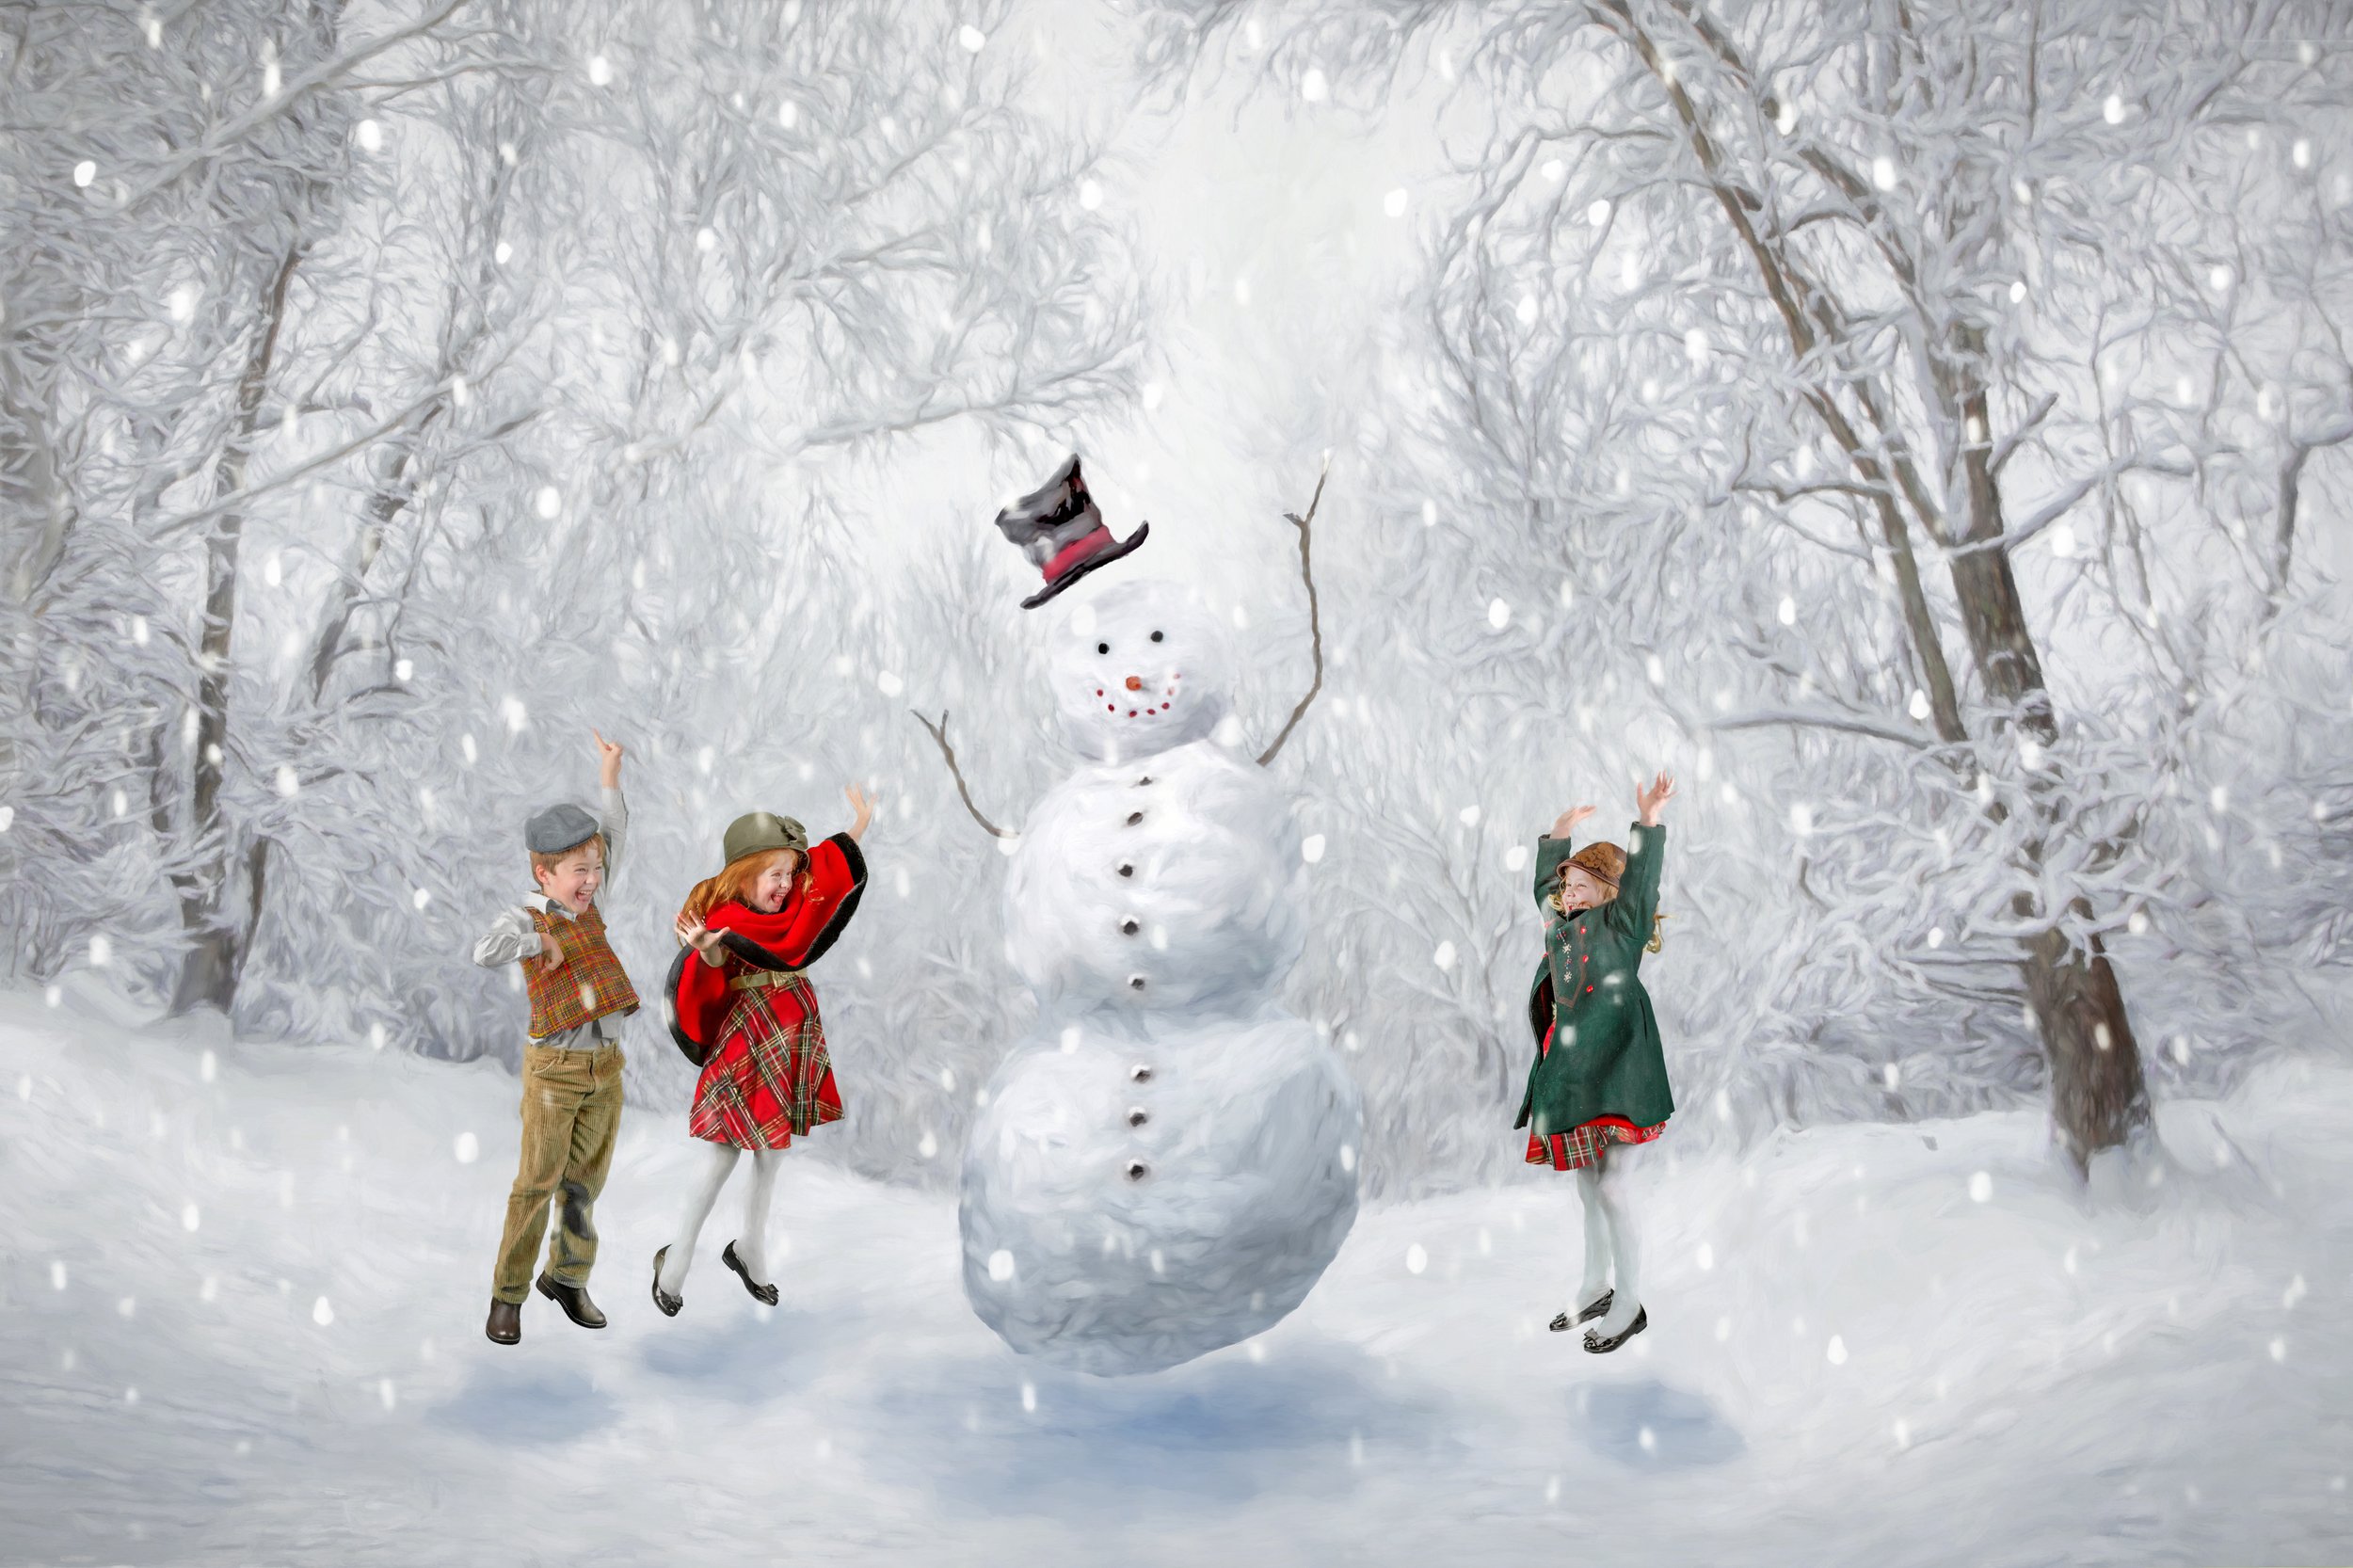 snowman jumping with children 3.jpg